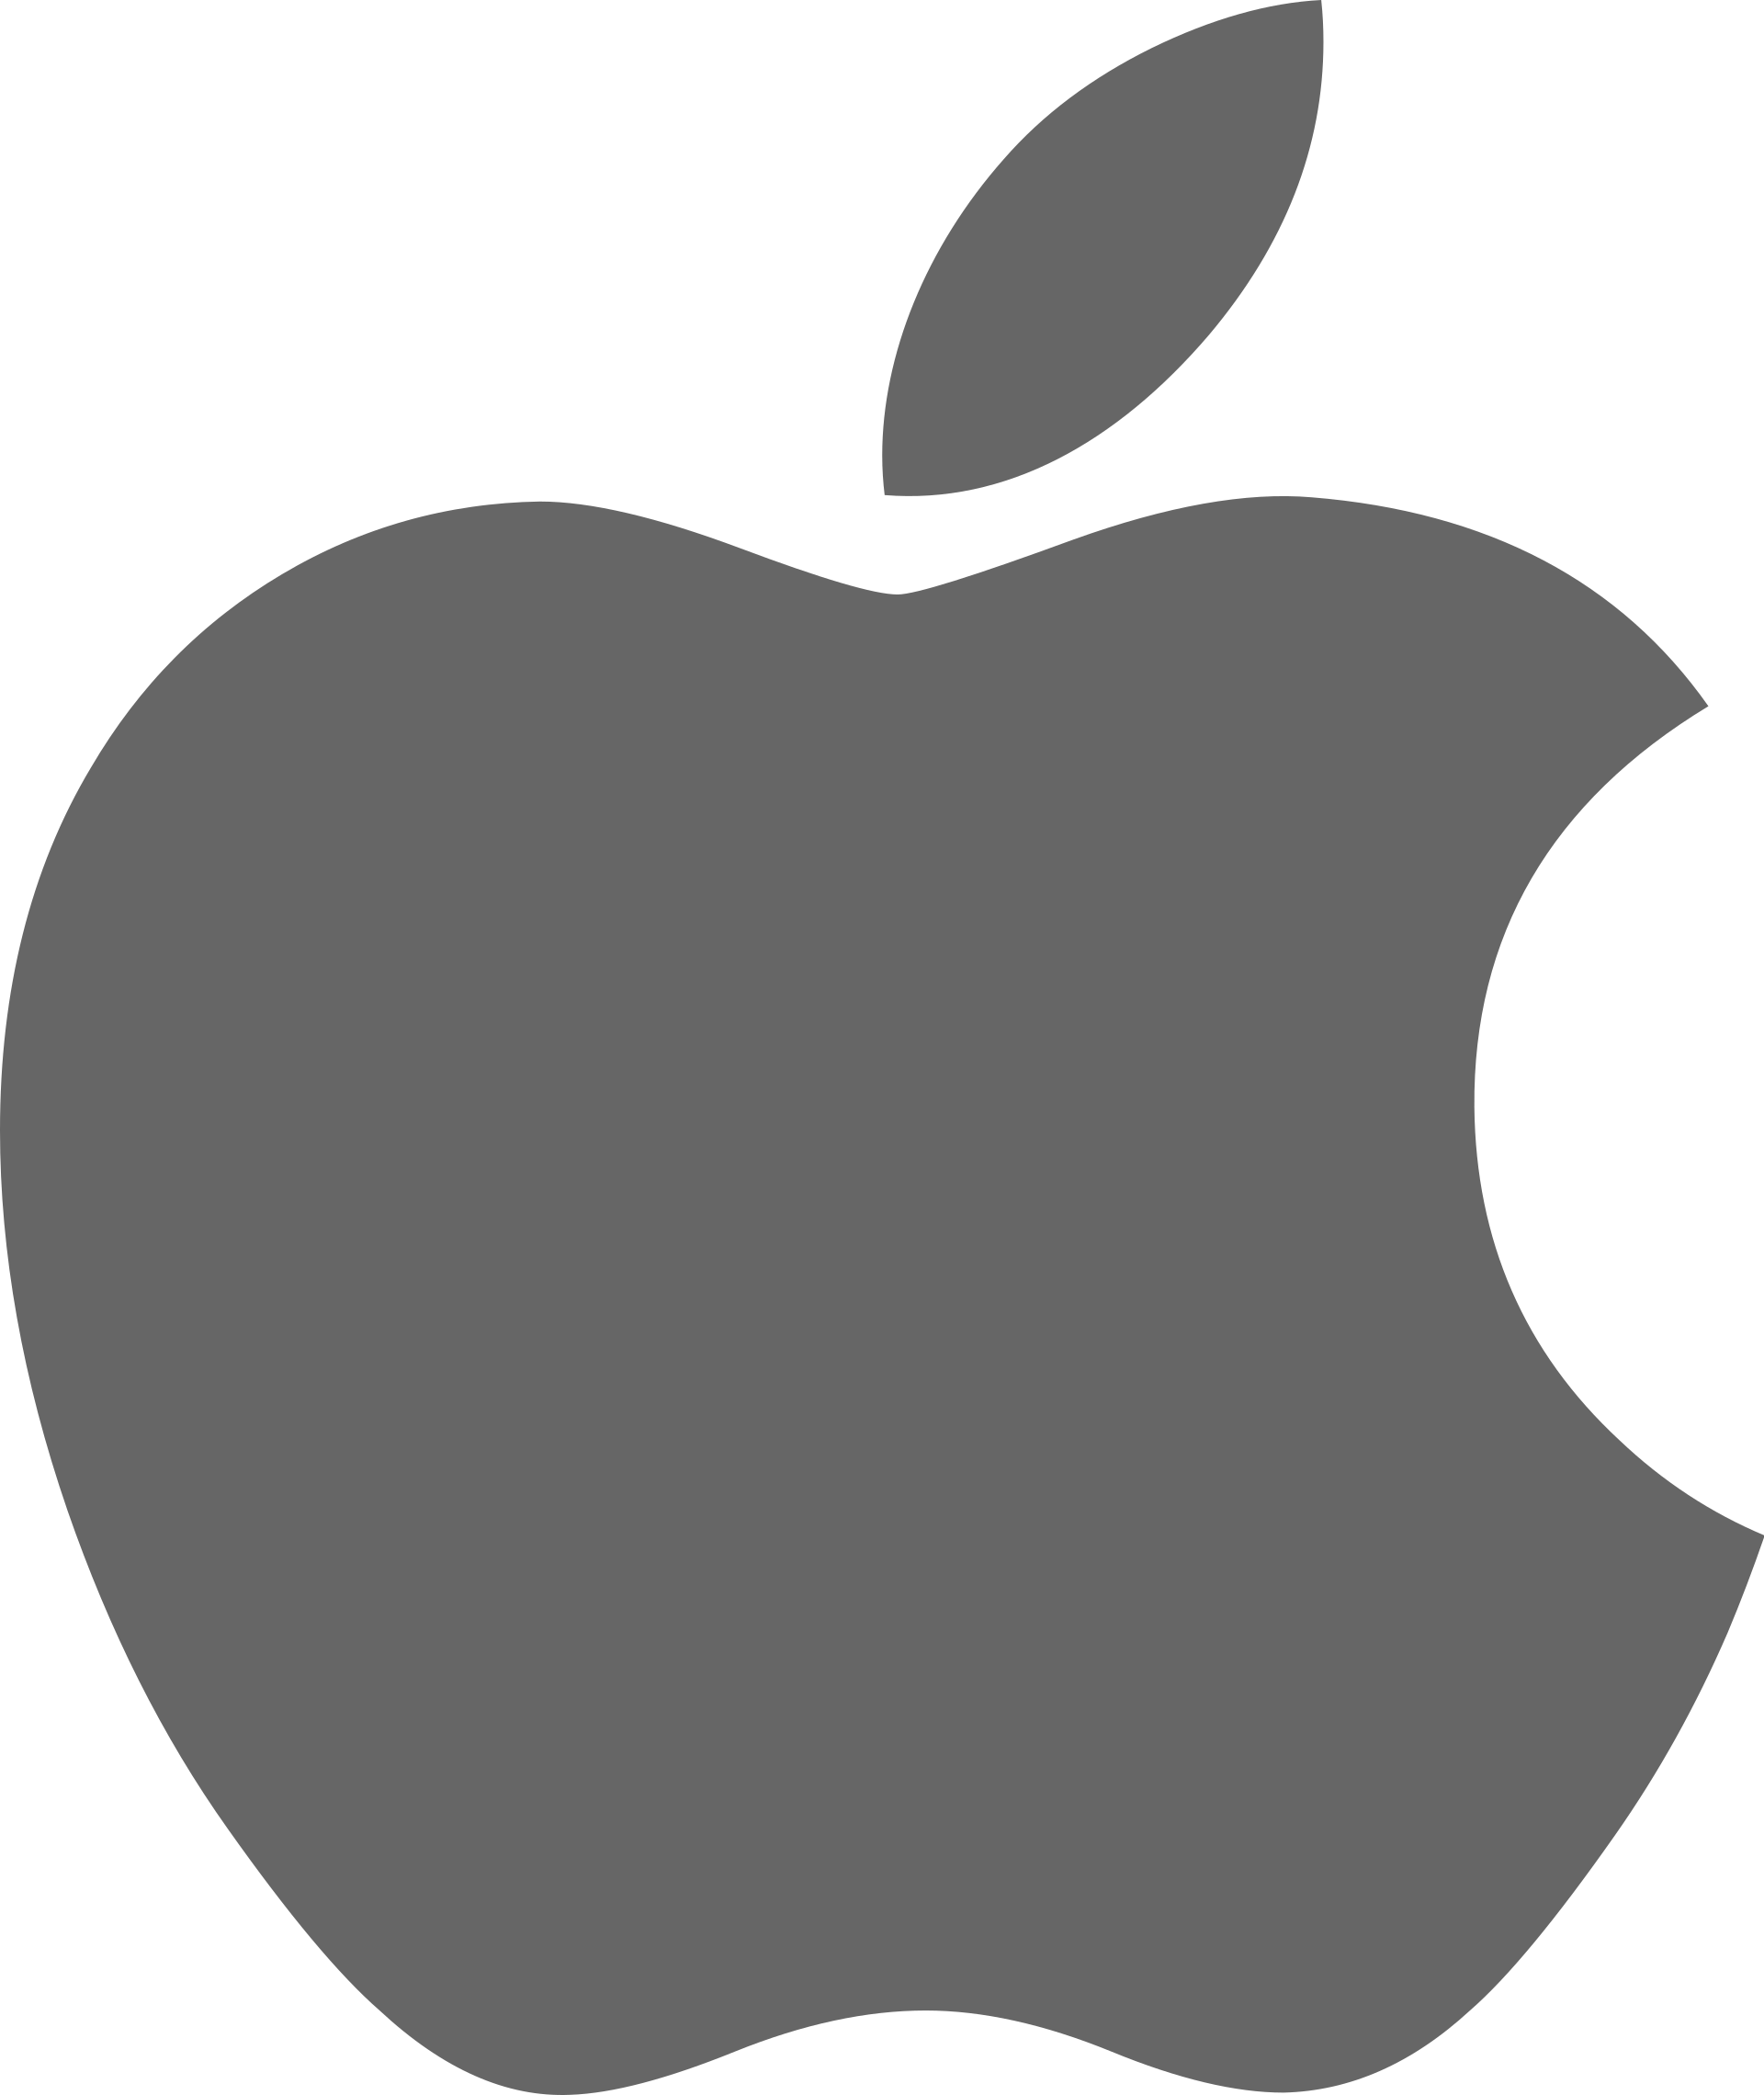 Apple_logo_dark_grey.svg.png